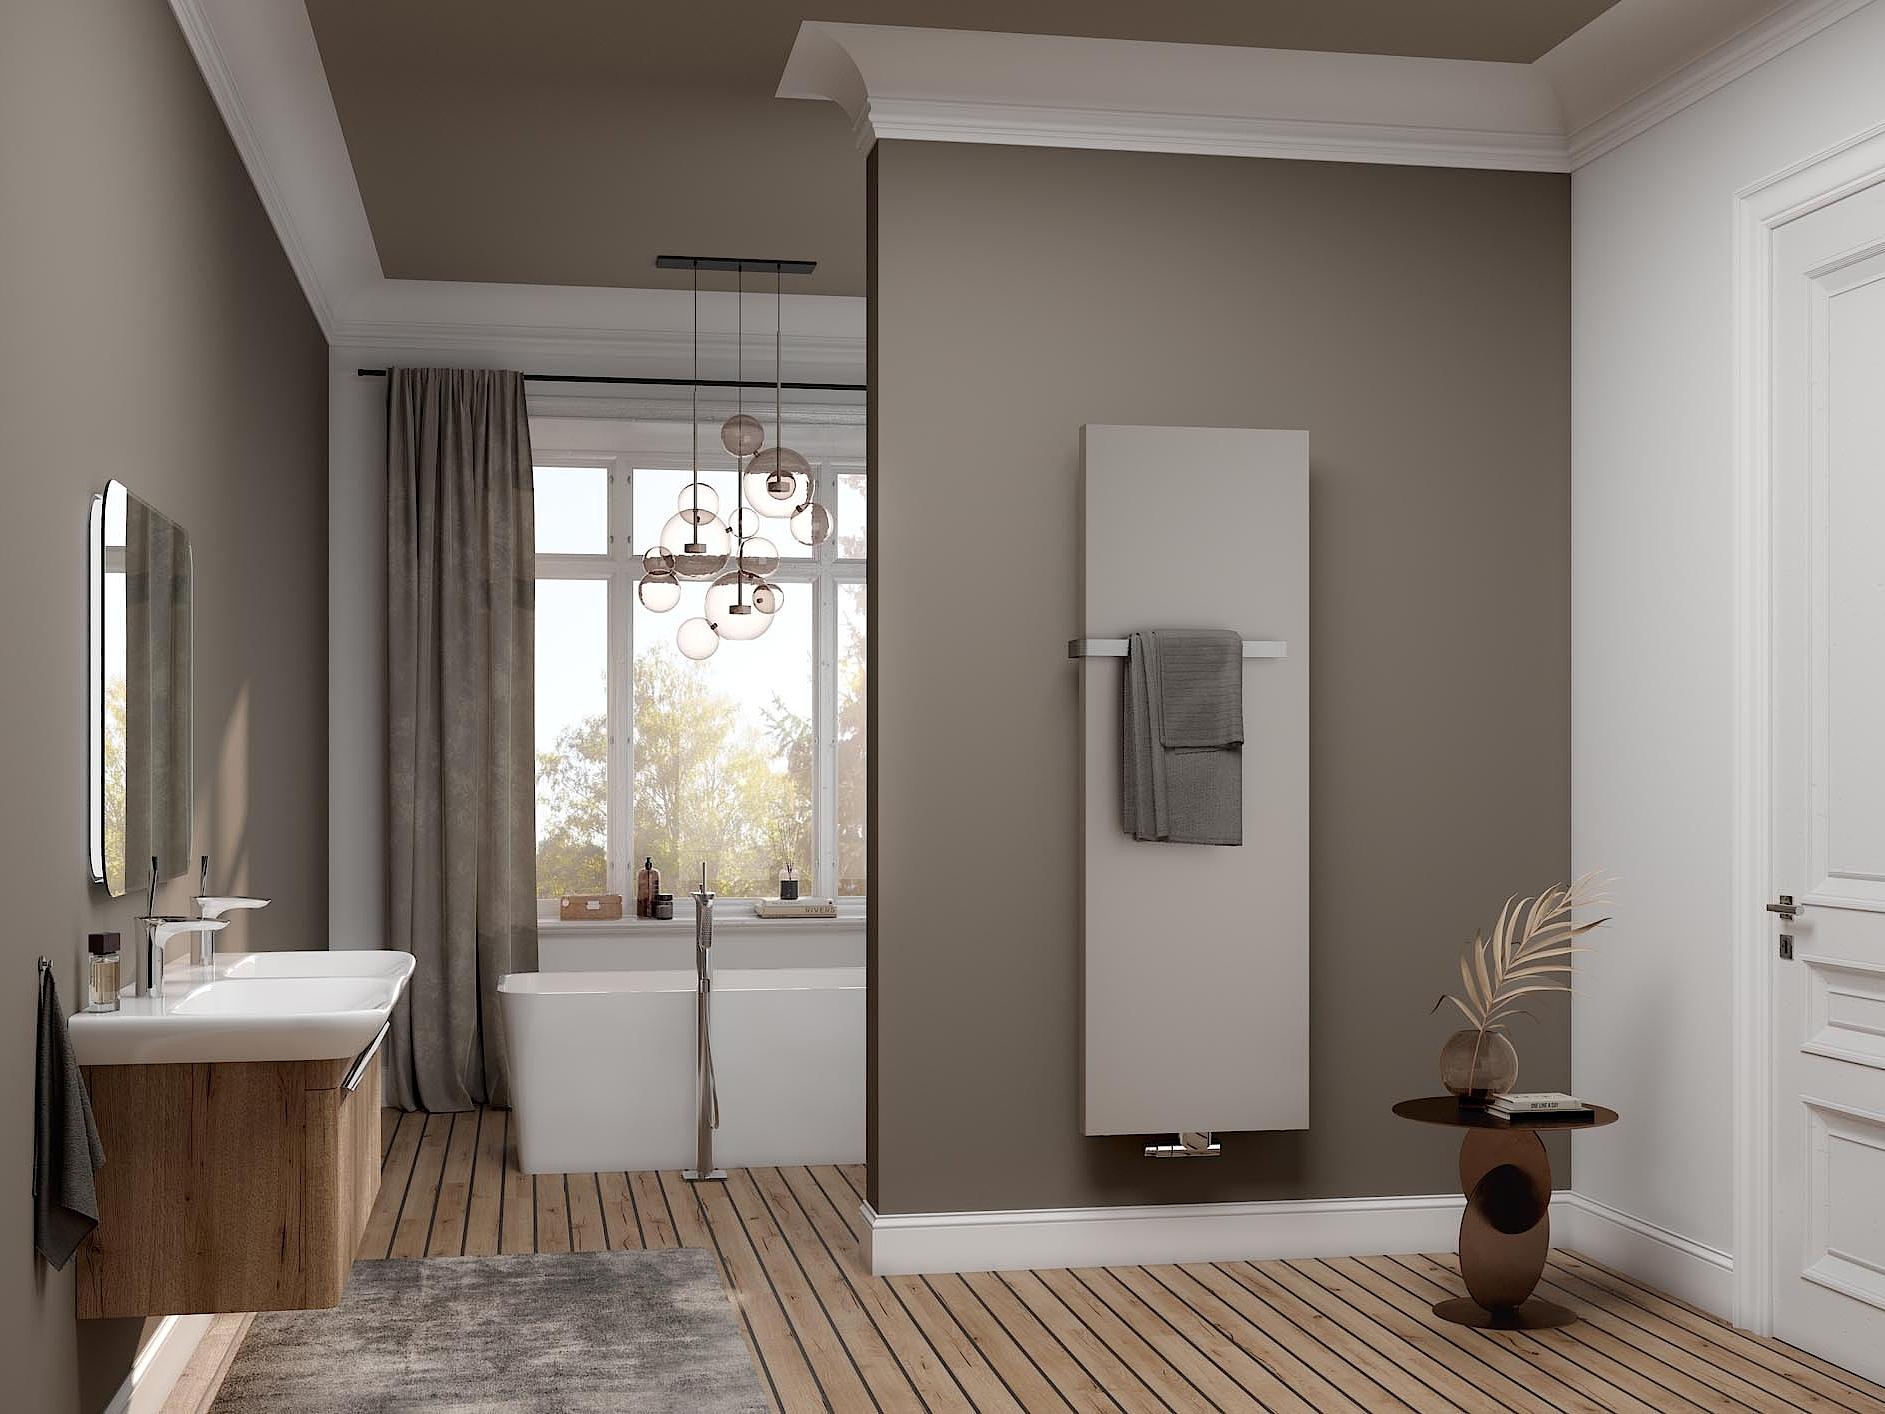 Kermi Rubeo design and bathroom radiators – pure aesthetics with clear, minimalist design lines. 